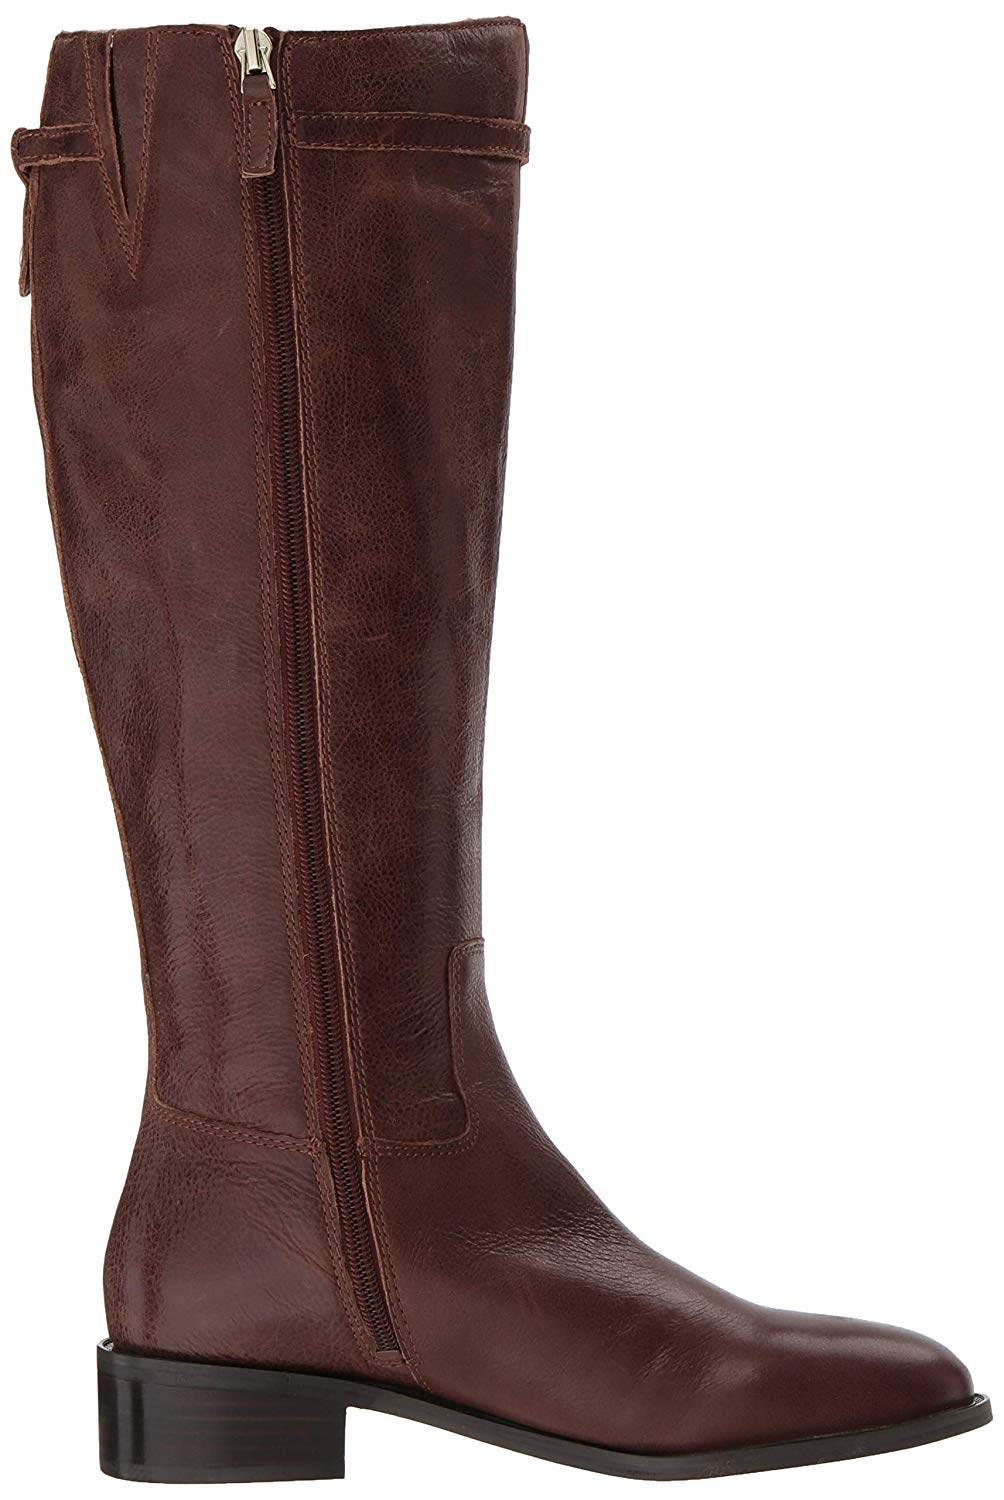 Franco Sarto Women's Belaire Equestrian Boot, Brown, Size 9.0 DeIK ...